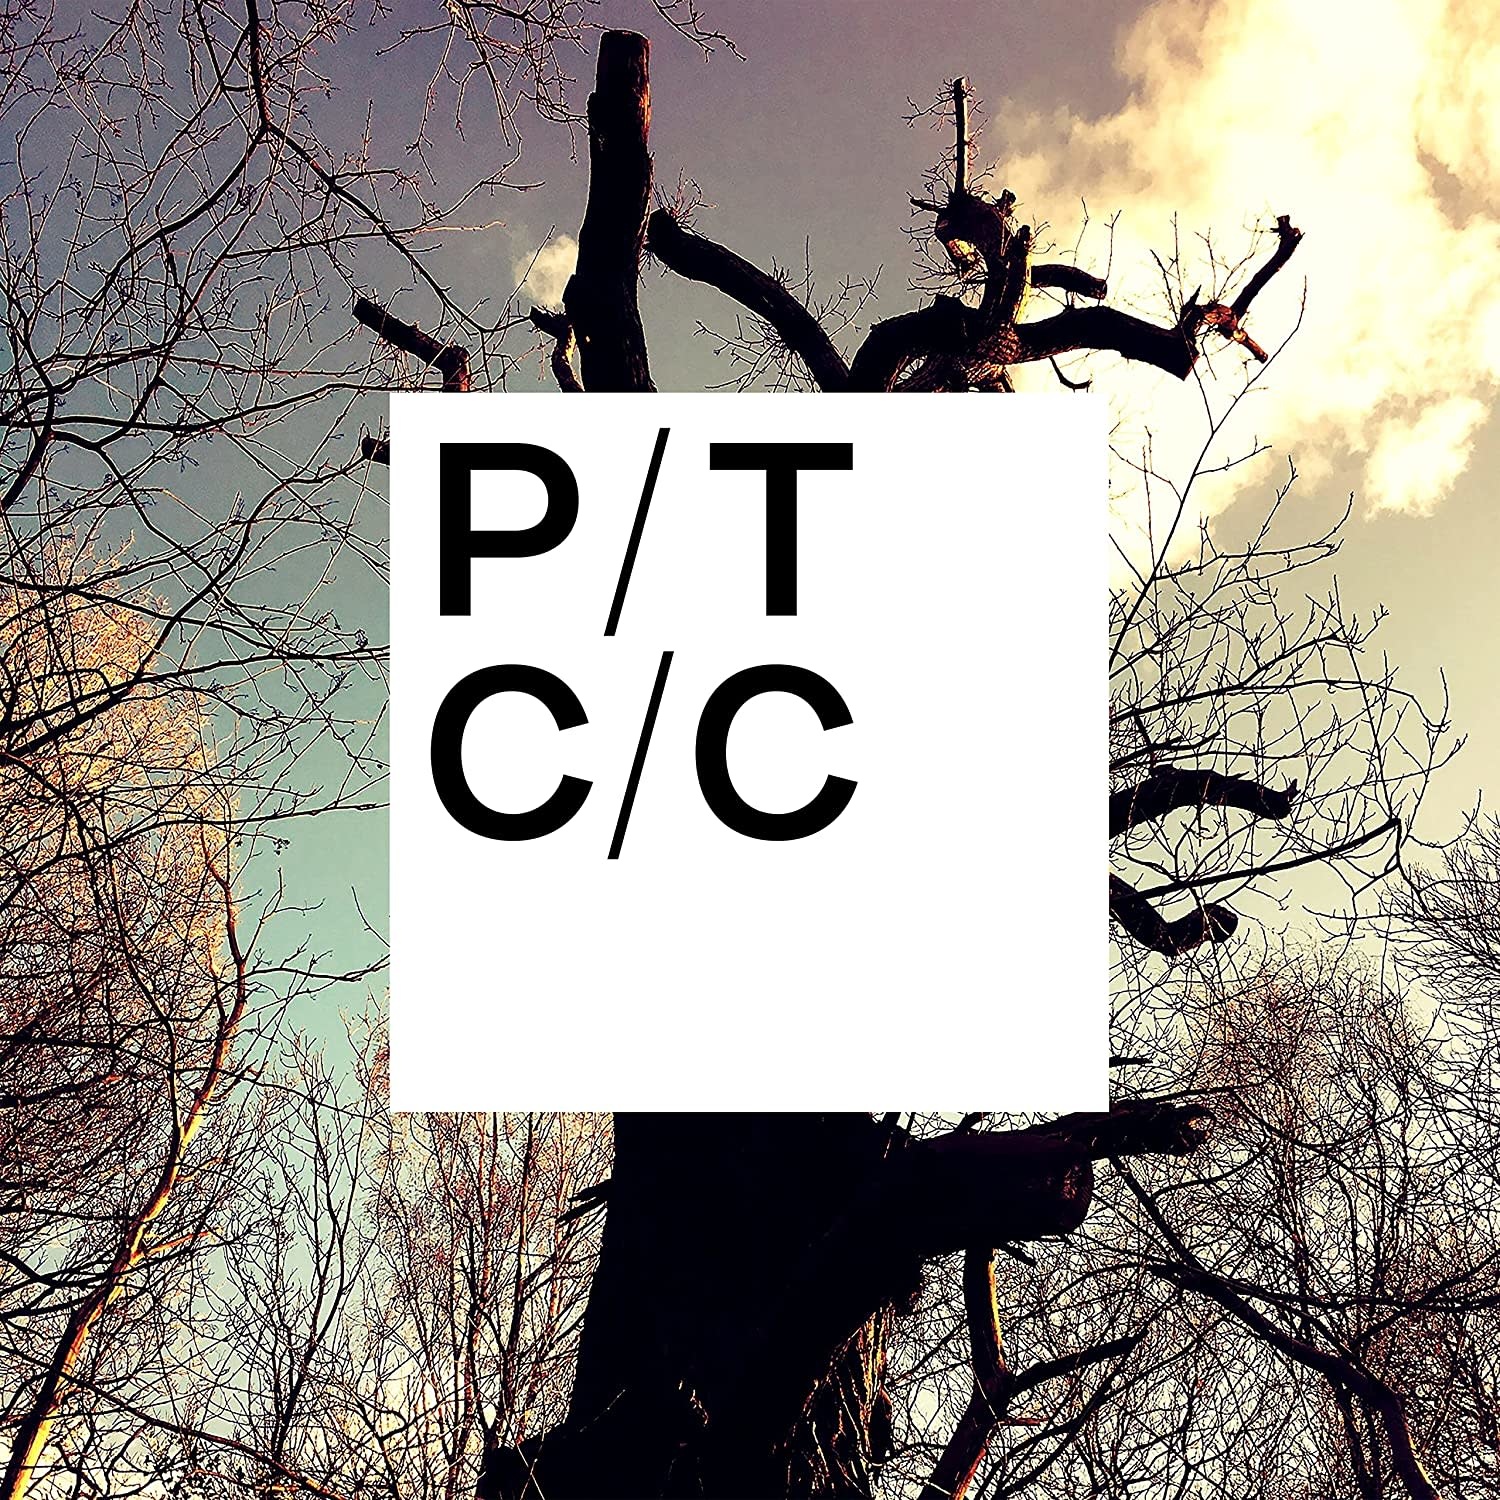 Porcupine Tree – Closure / Continuation